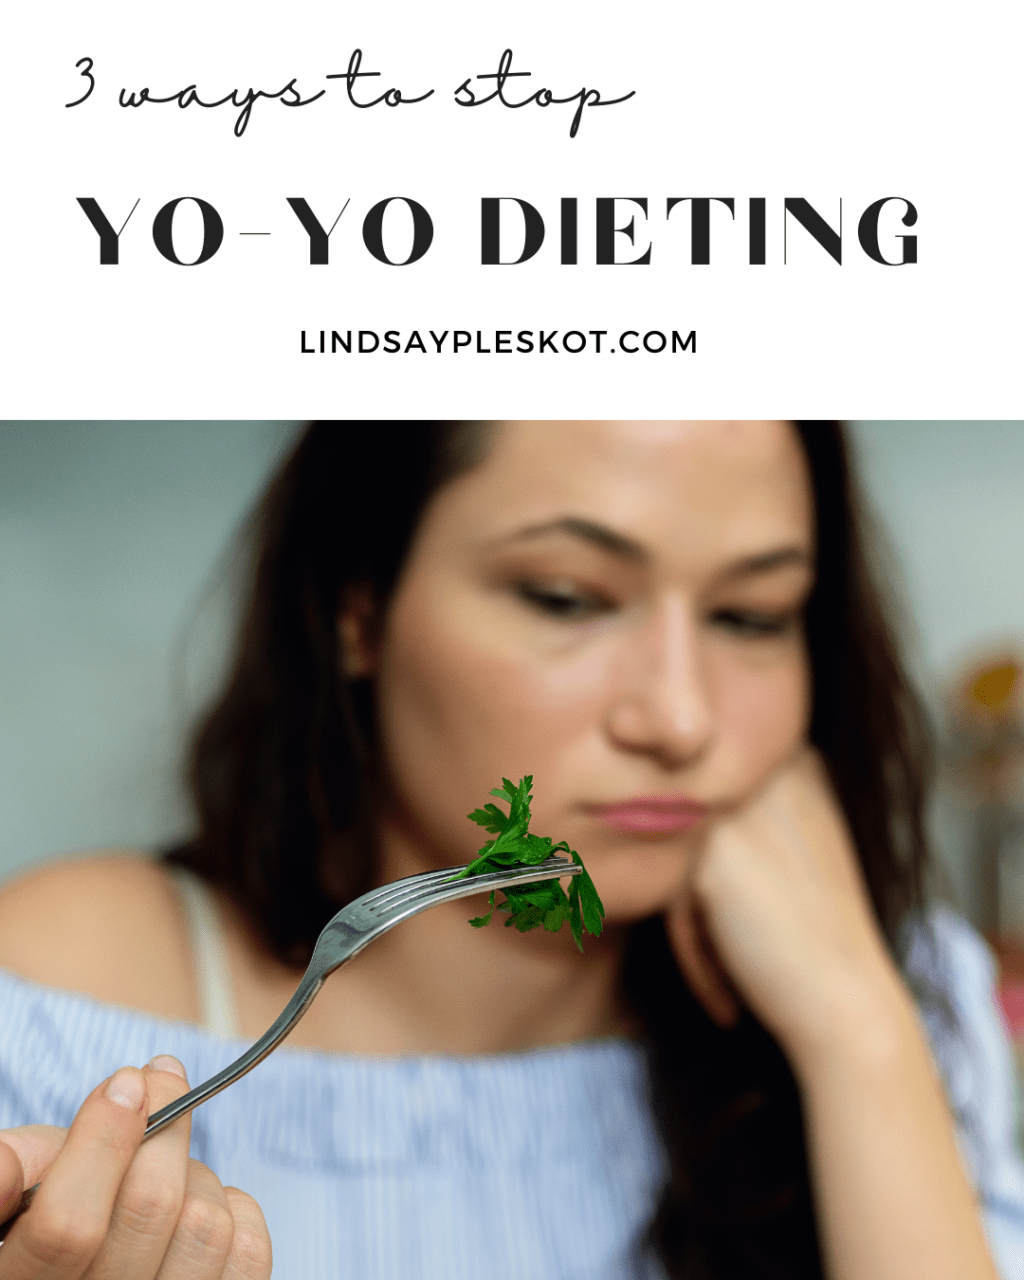 træfning at forstå Scan 3 Ways to Stop Yo-Yo Dieting Immediately - Lindsay Pleskot, RD